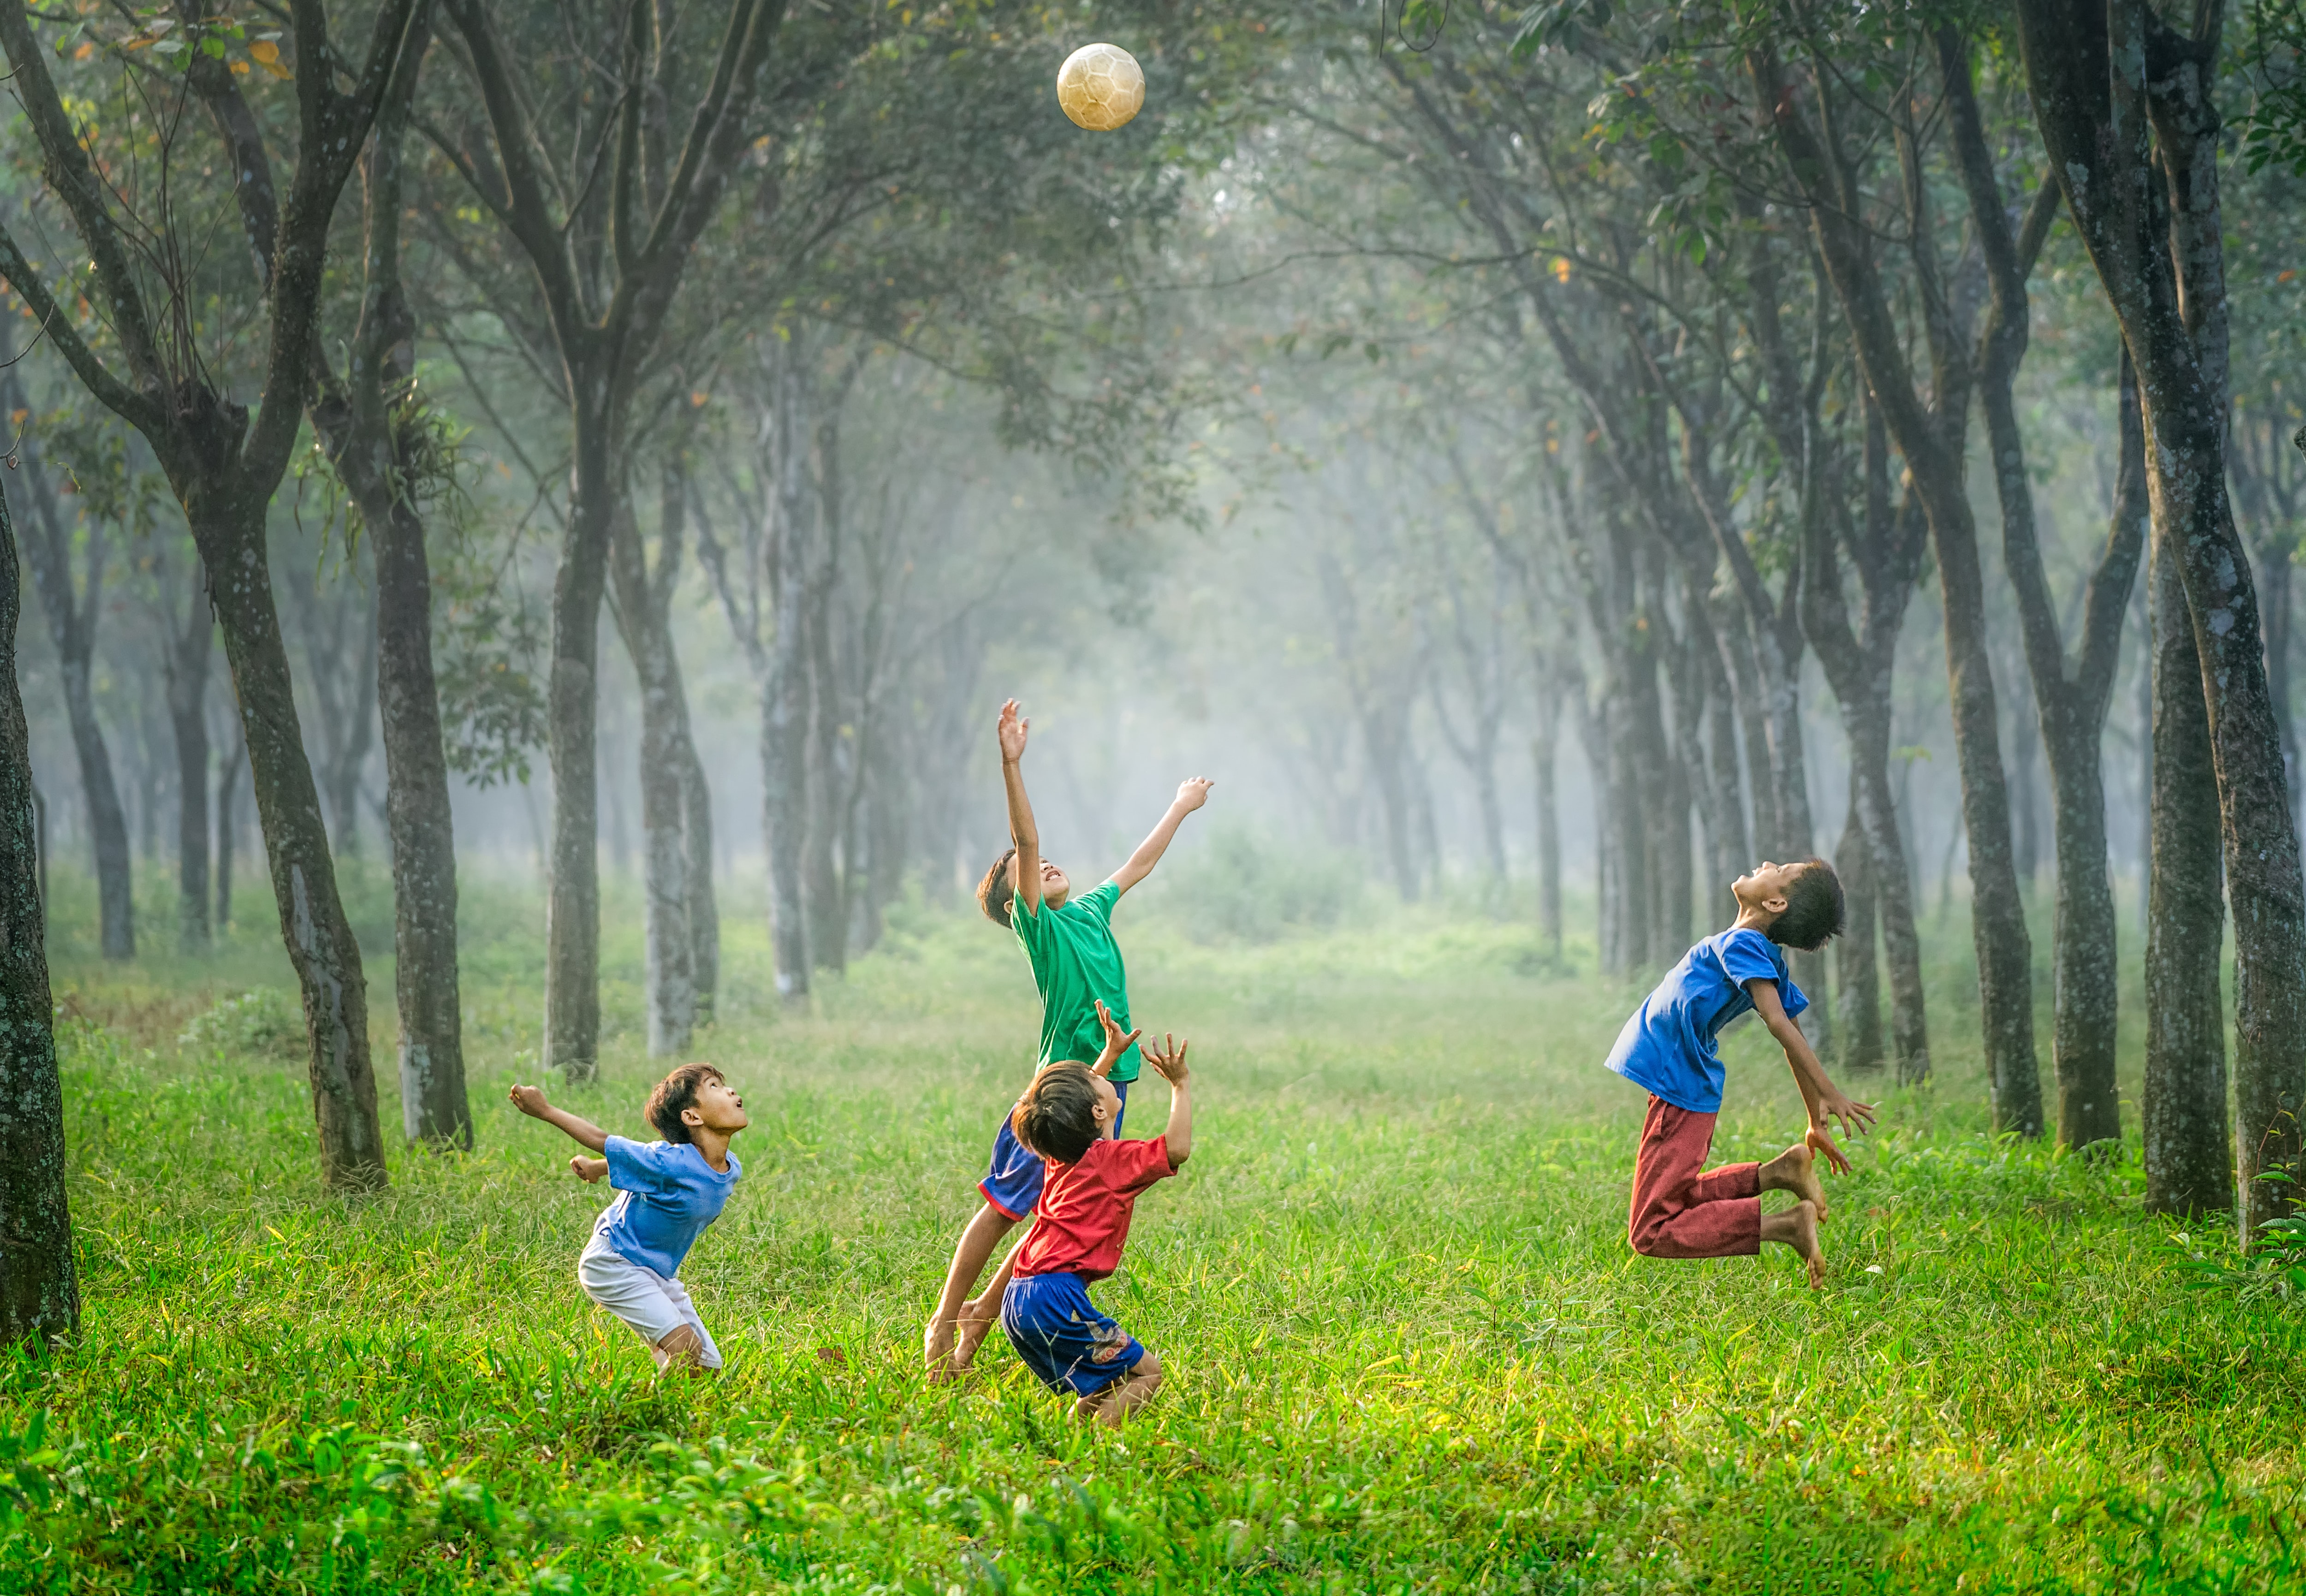 Copii in parc printre copaci se joaca cu mingea si invata limba engleza